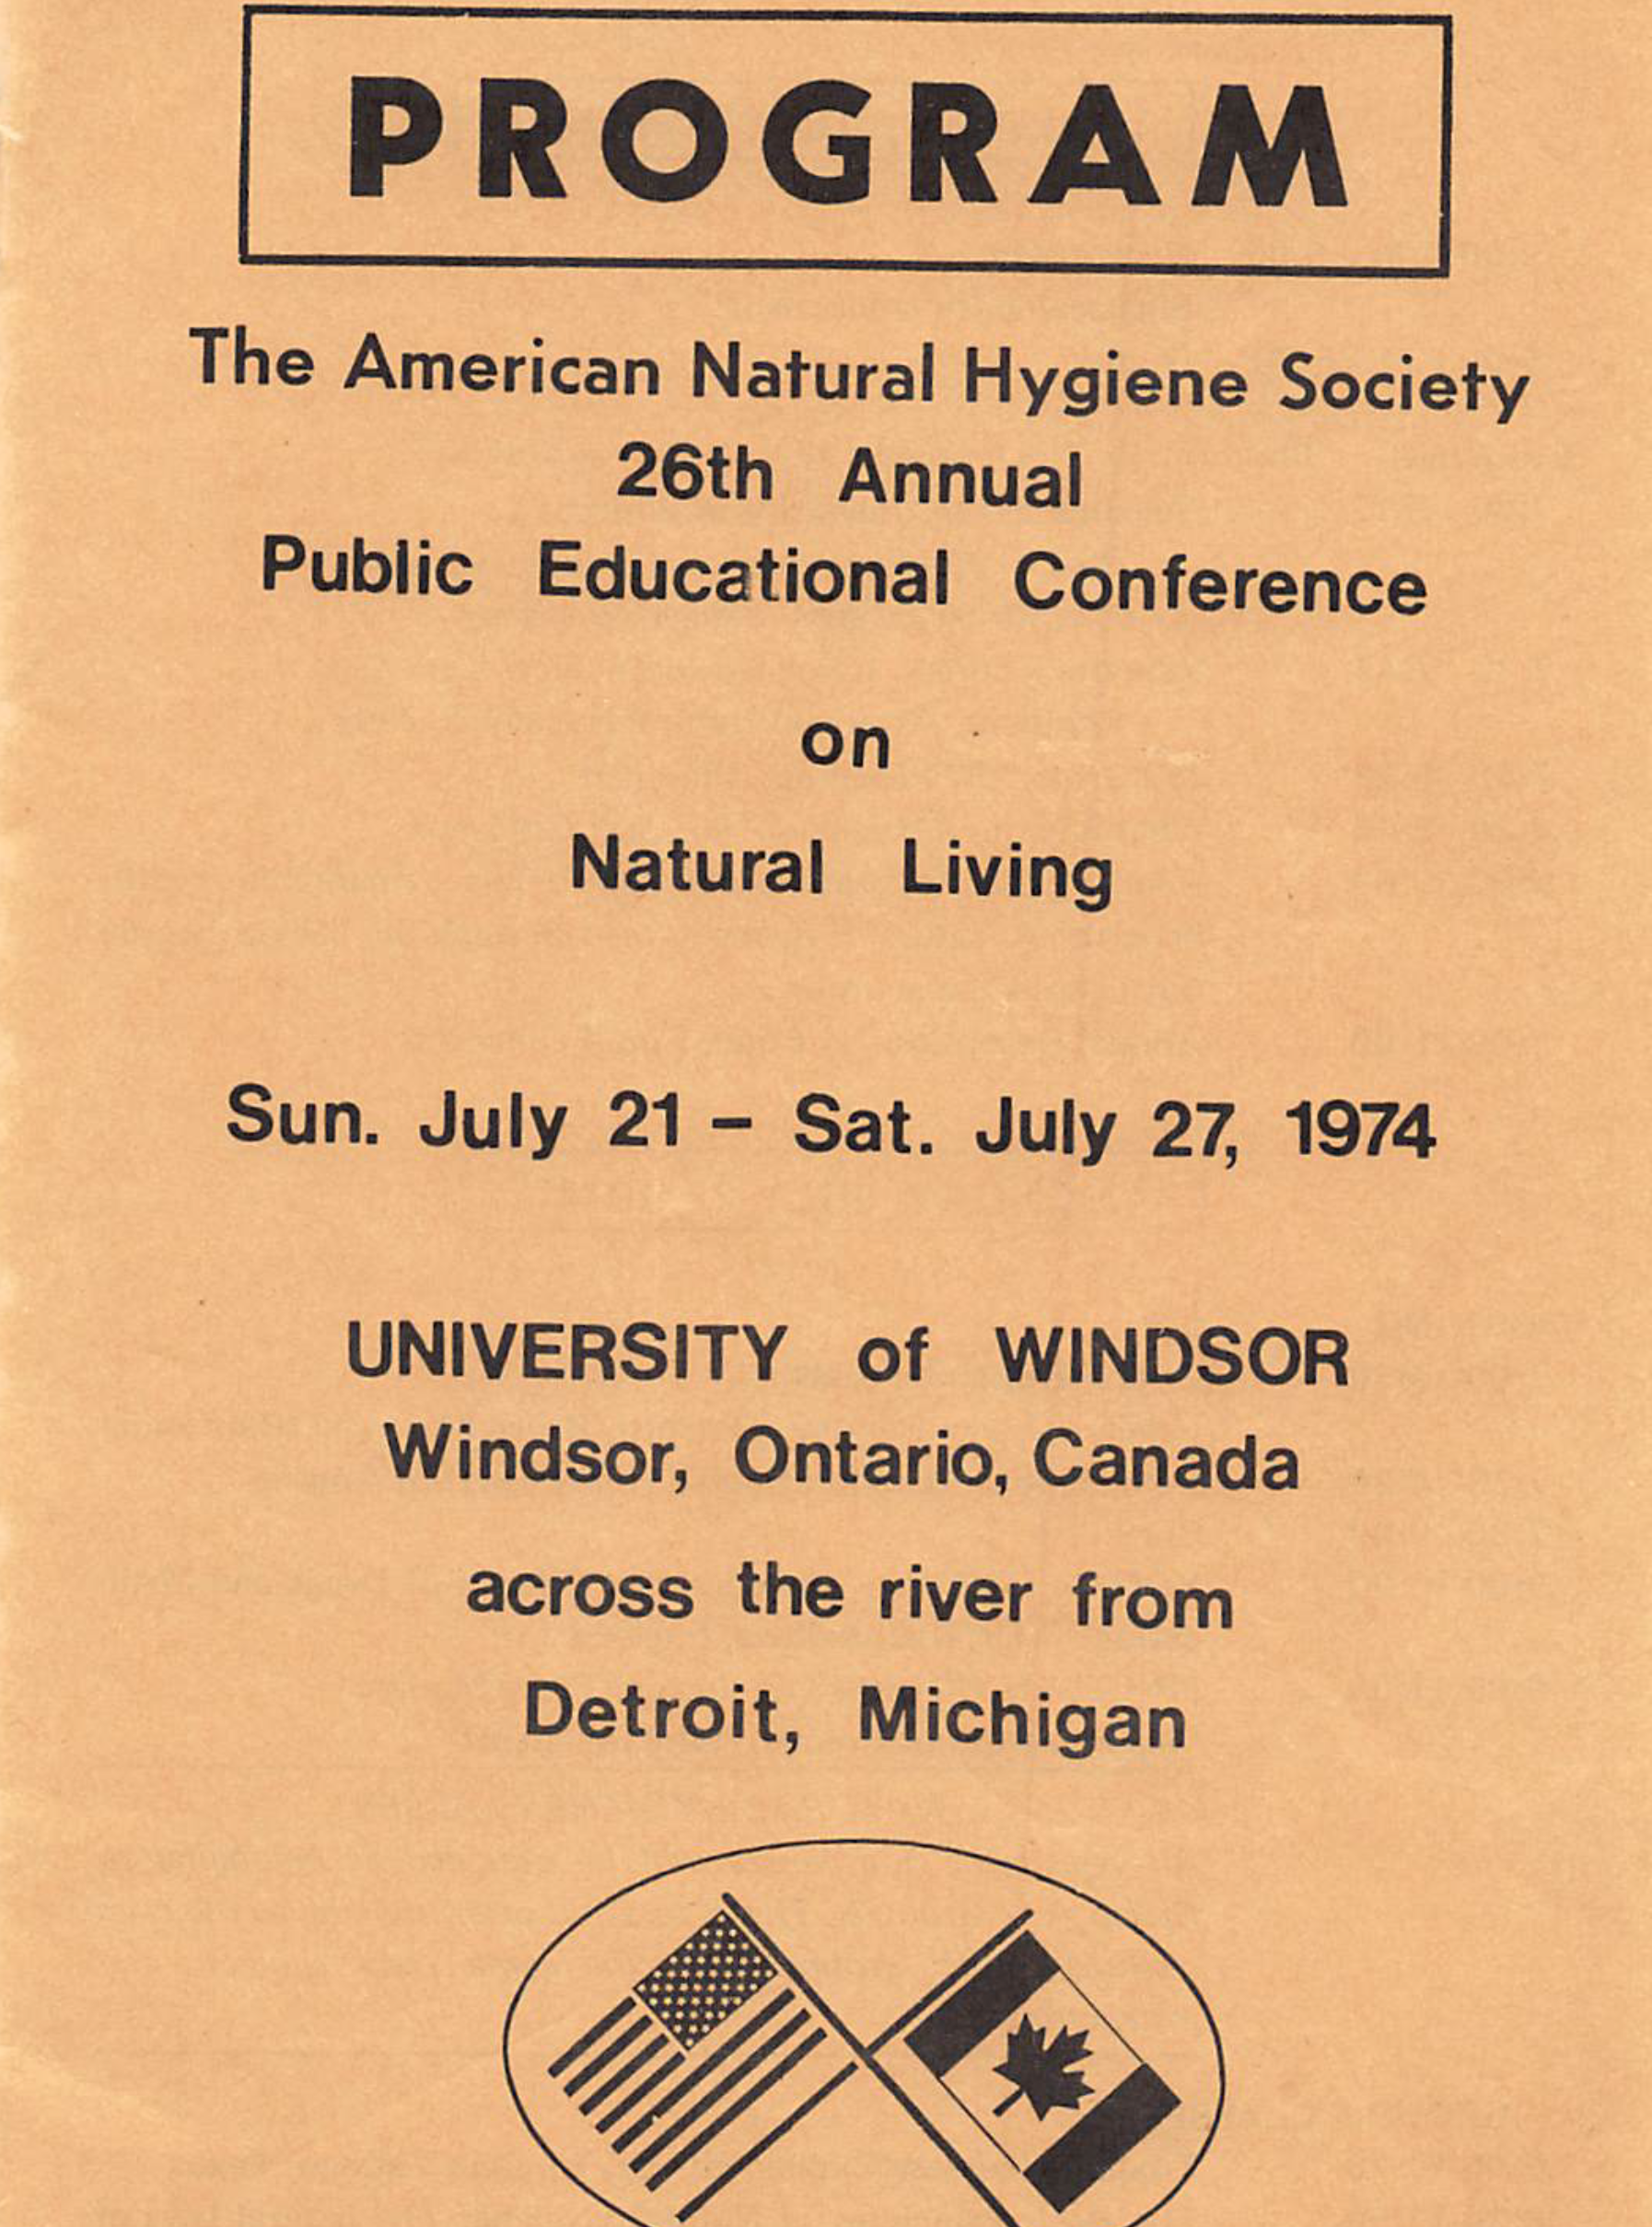 Conference Program. Detroit, 1974